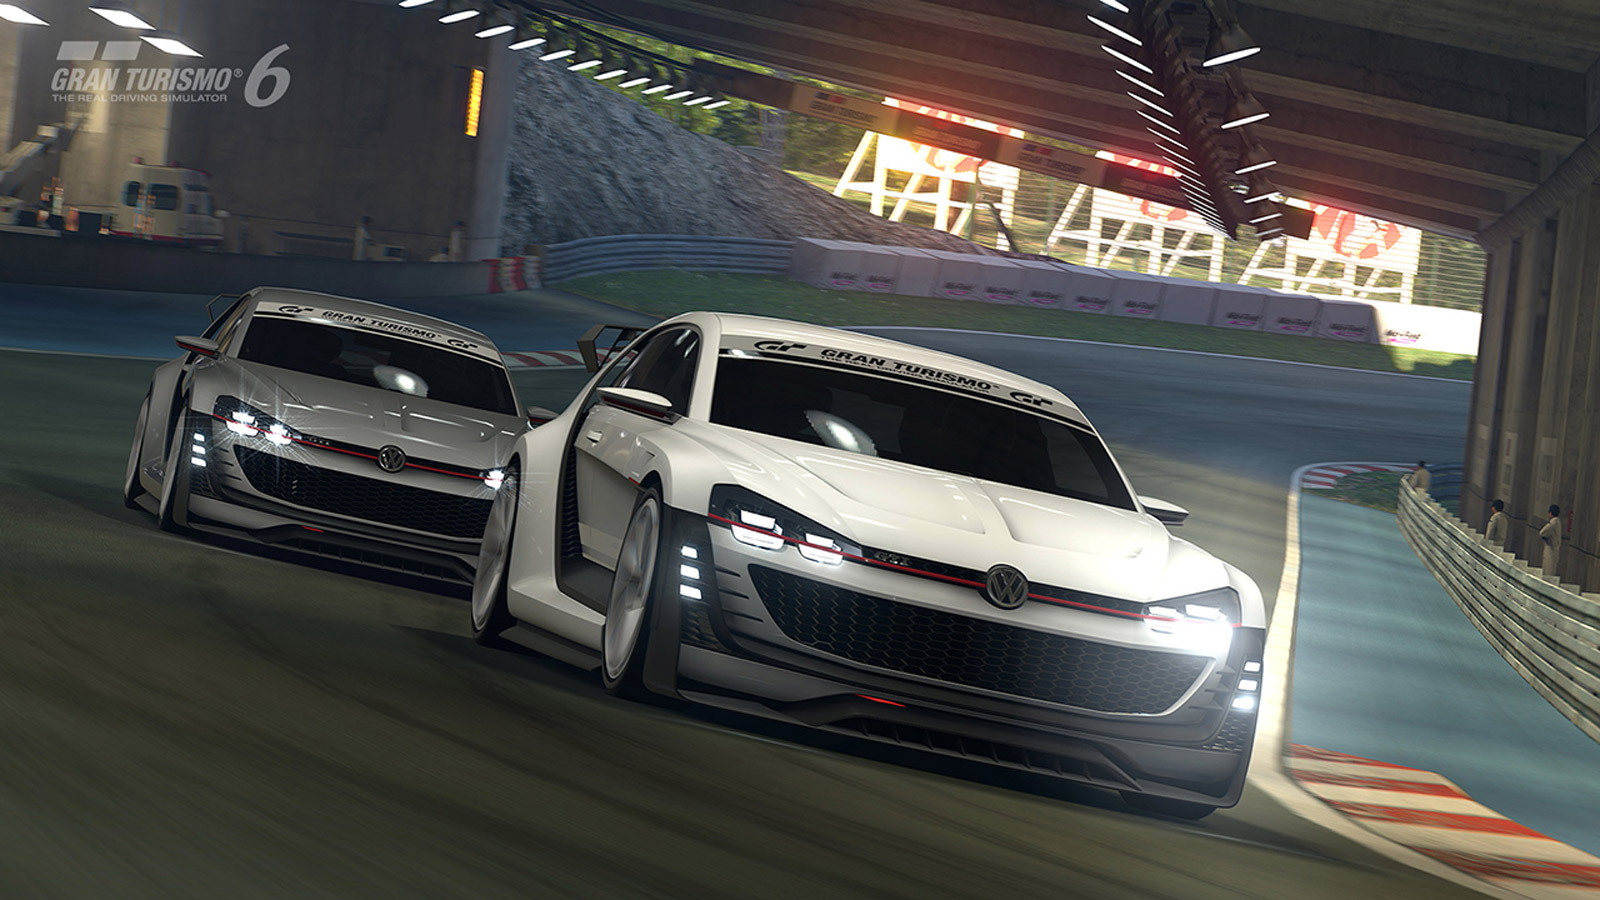 Volkswagen GTI Supersport Vision Gran Turismo concept